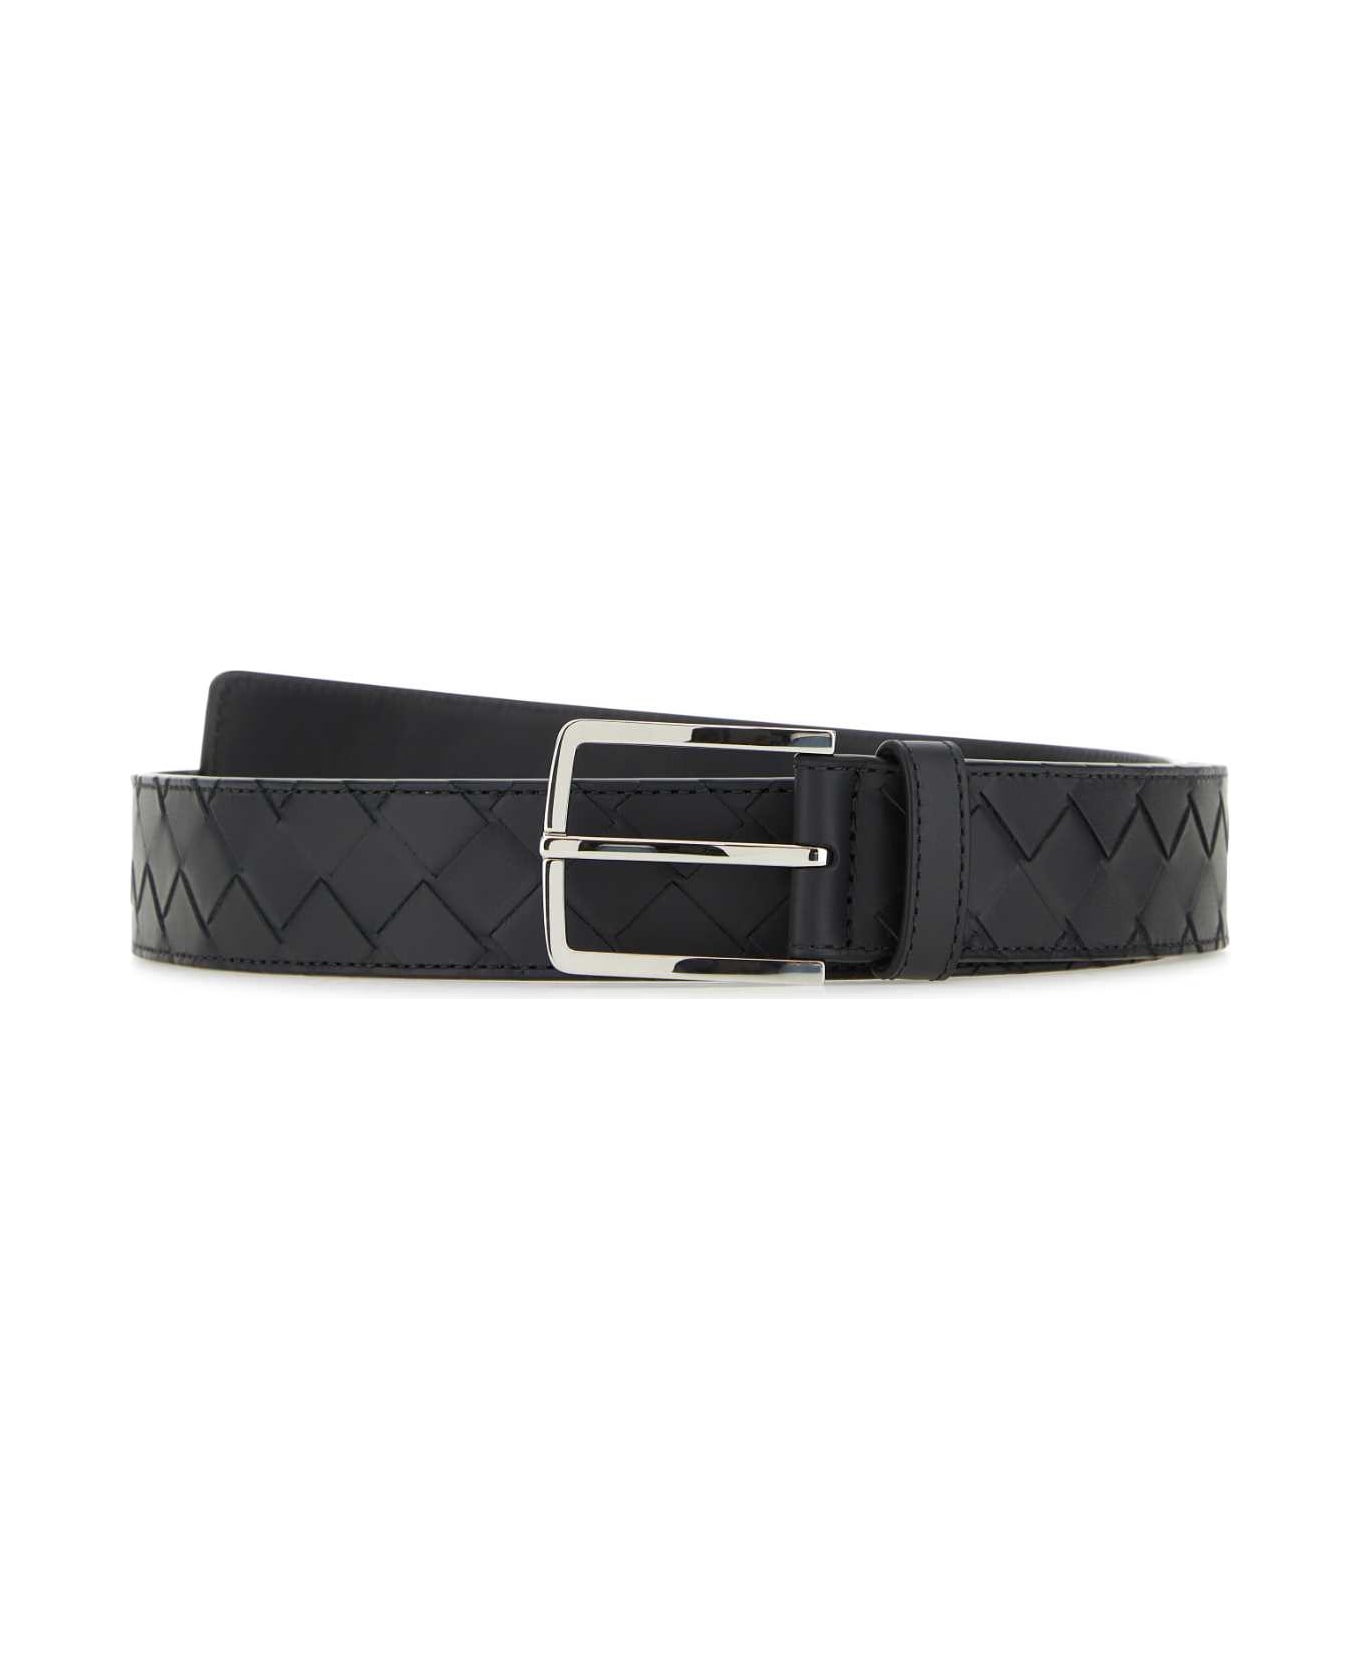 Bottega Veneta Black Leather Belt - ARDESIA